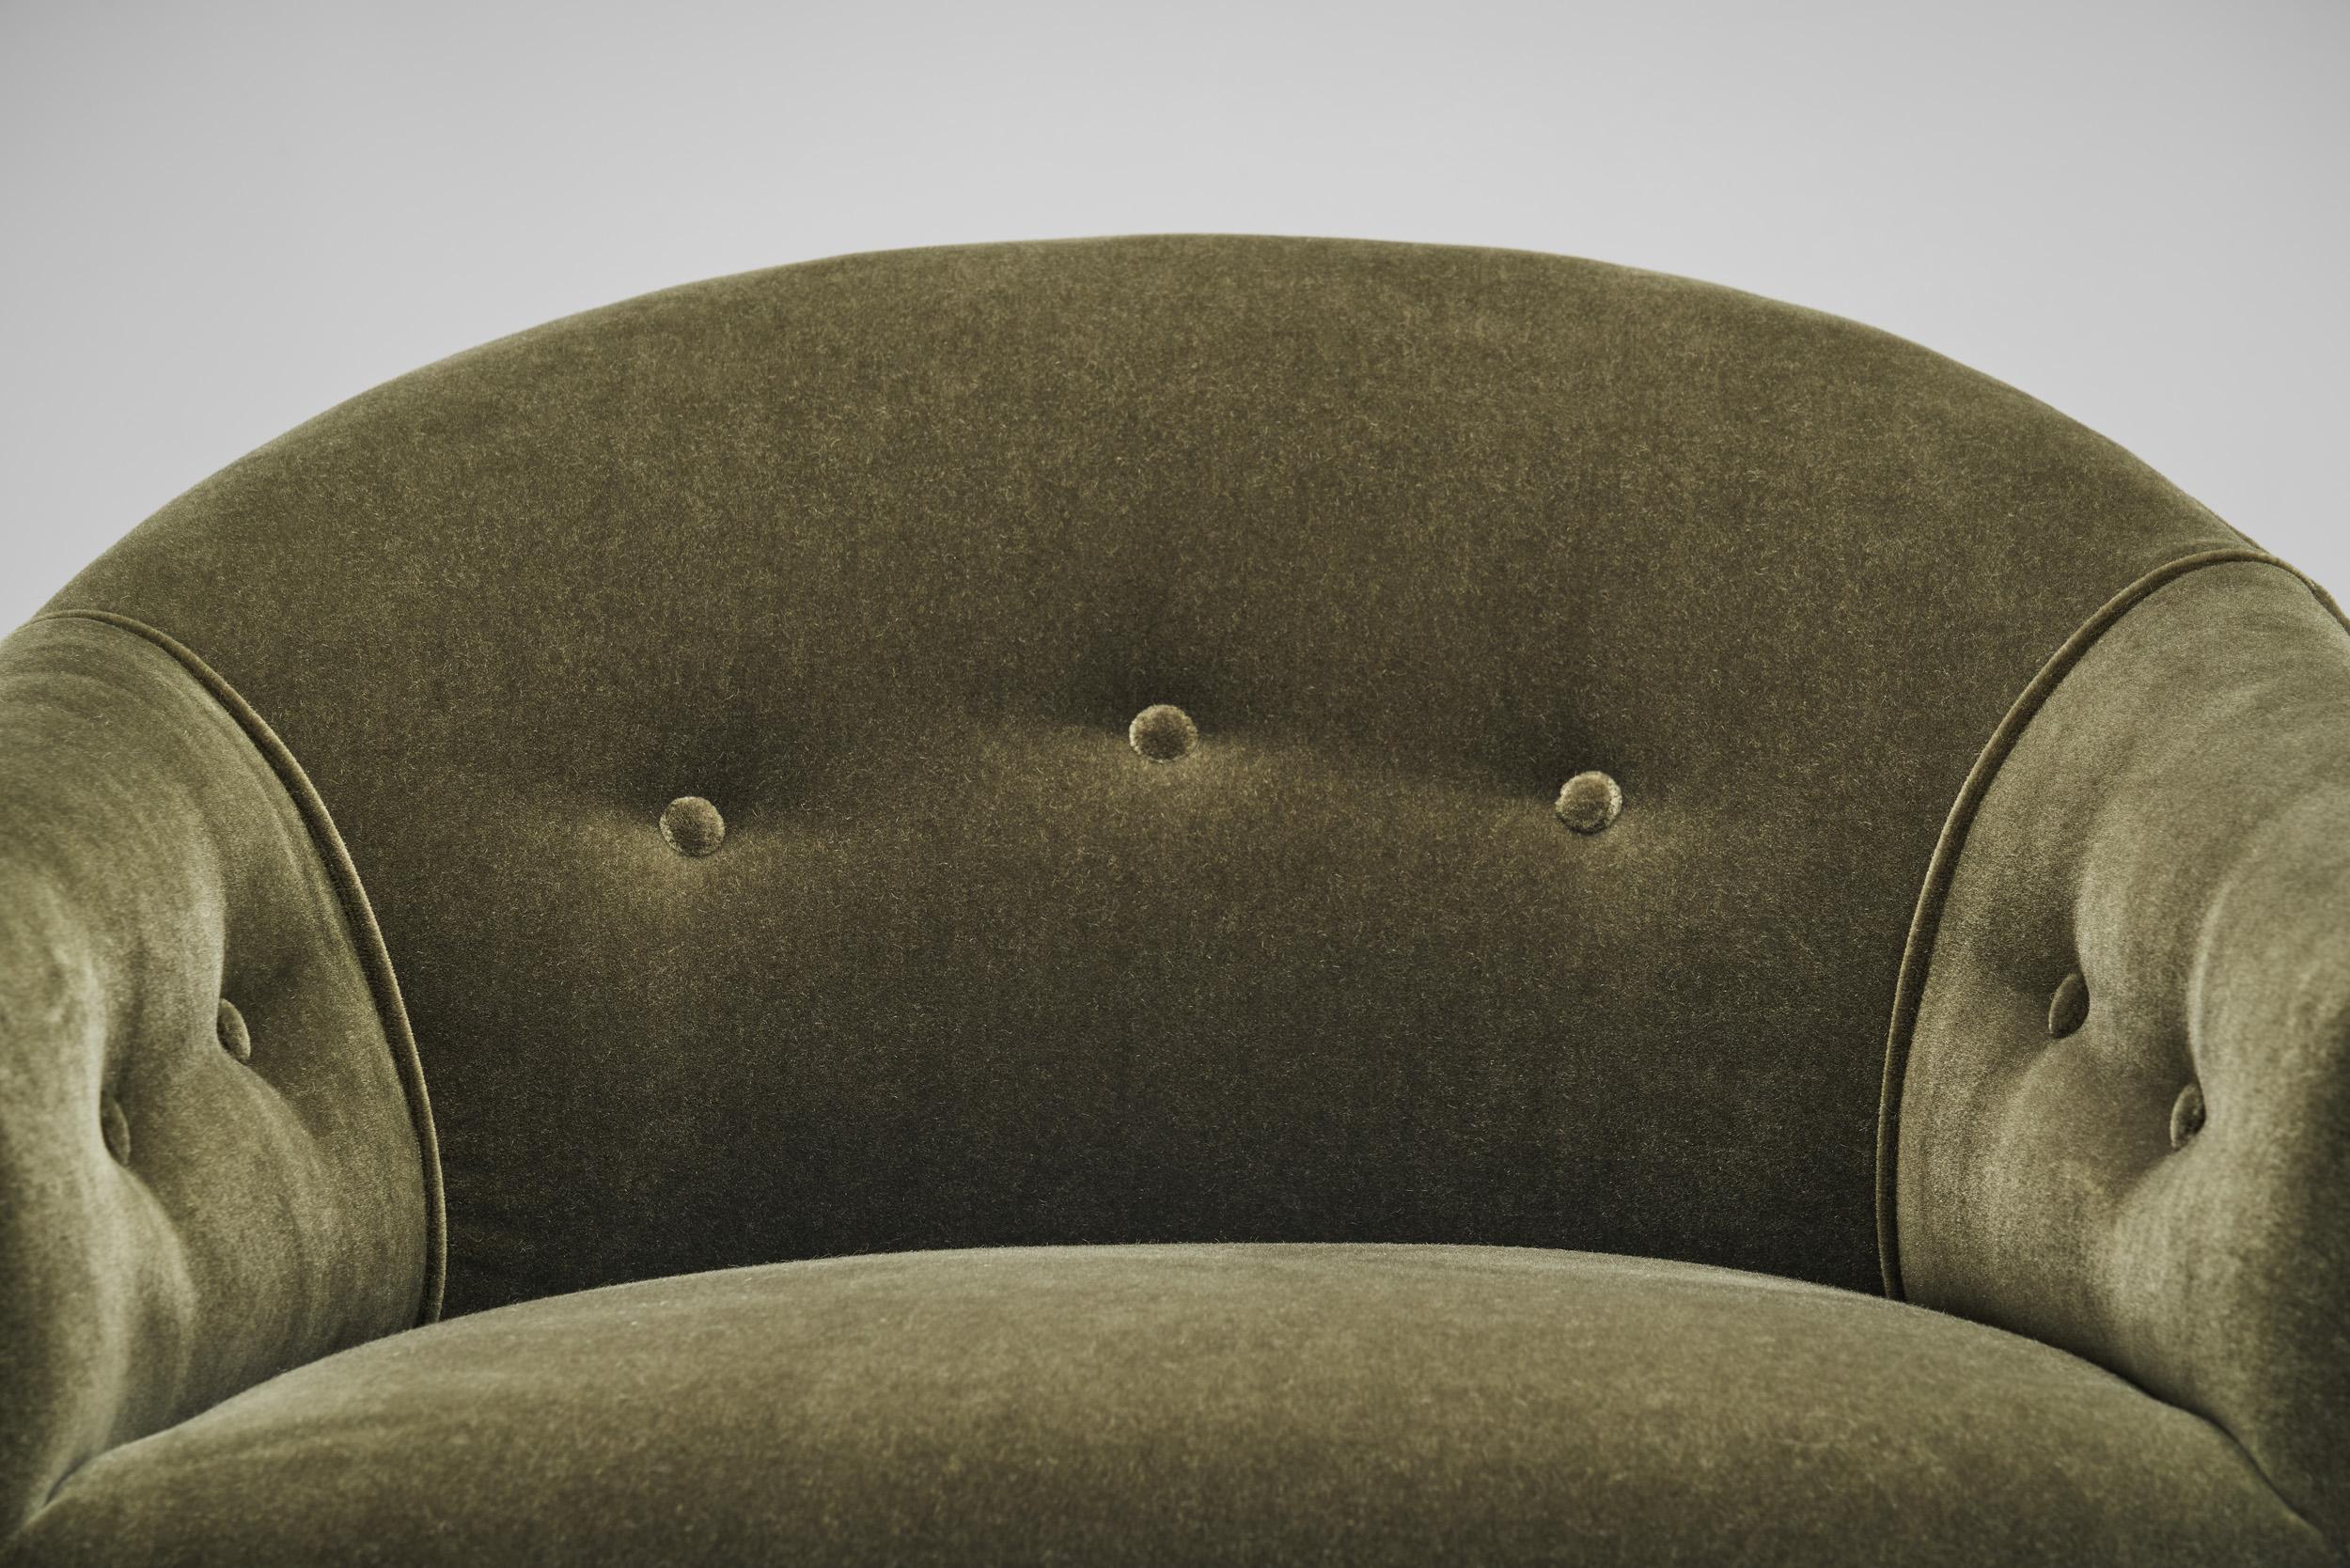 Upholstered Lounge Chairs in Oil Green Velvet, Europe ca 1950s For Sale 3